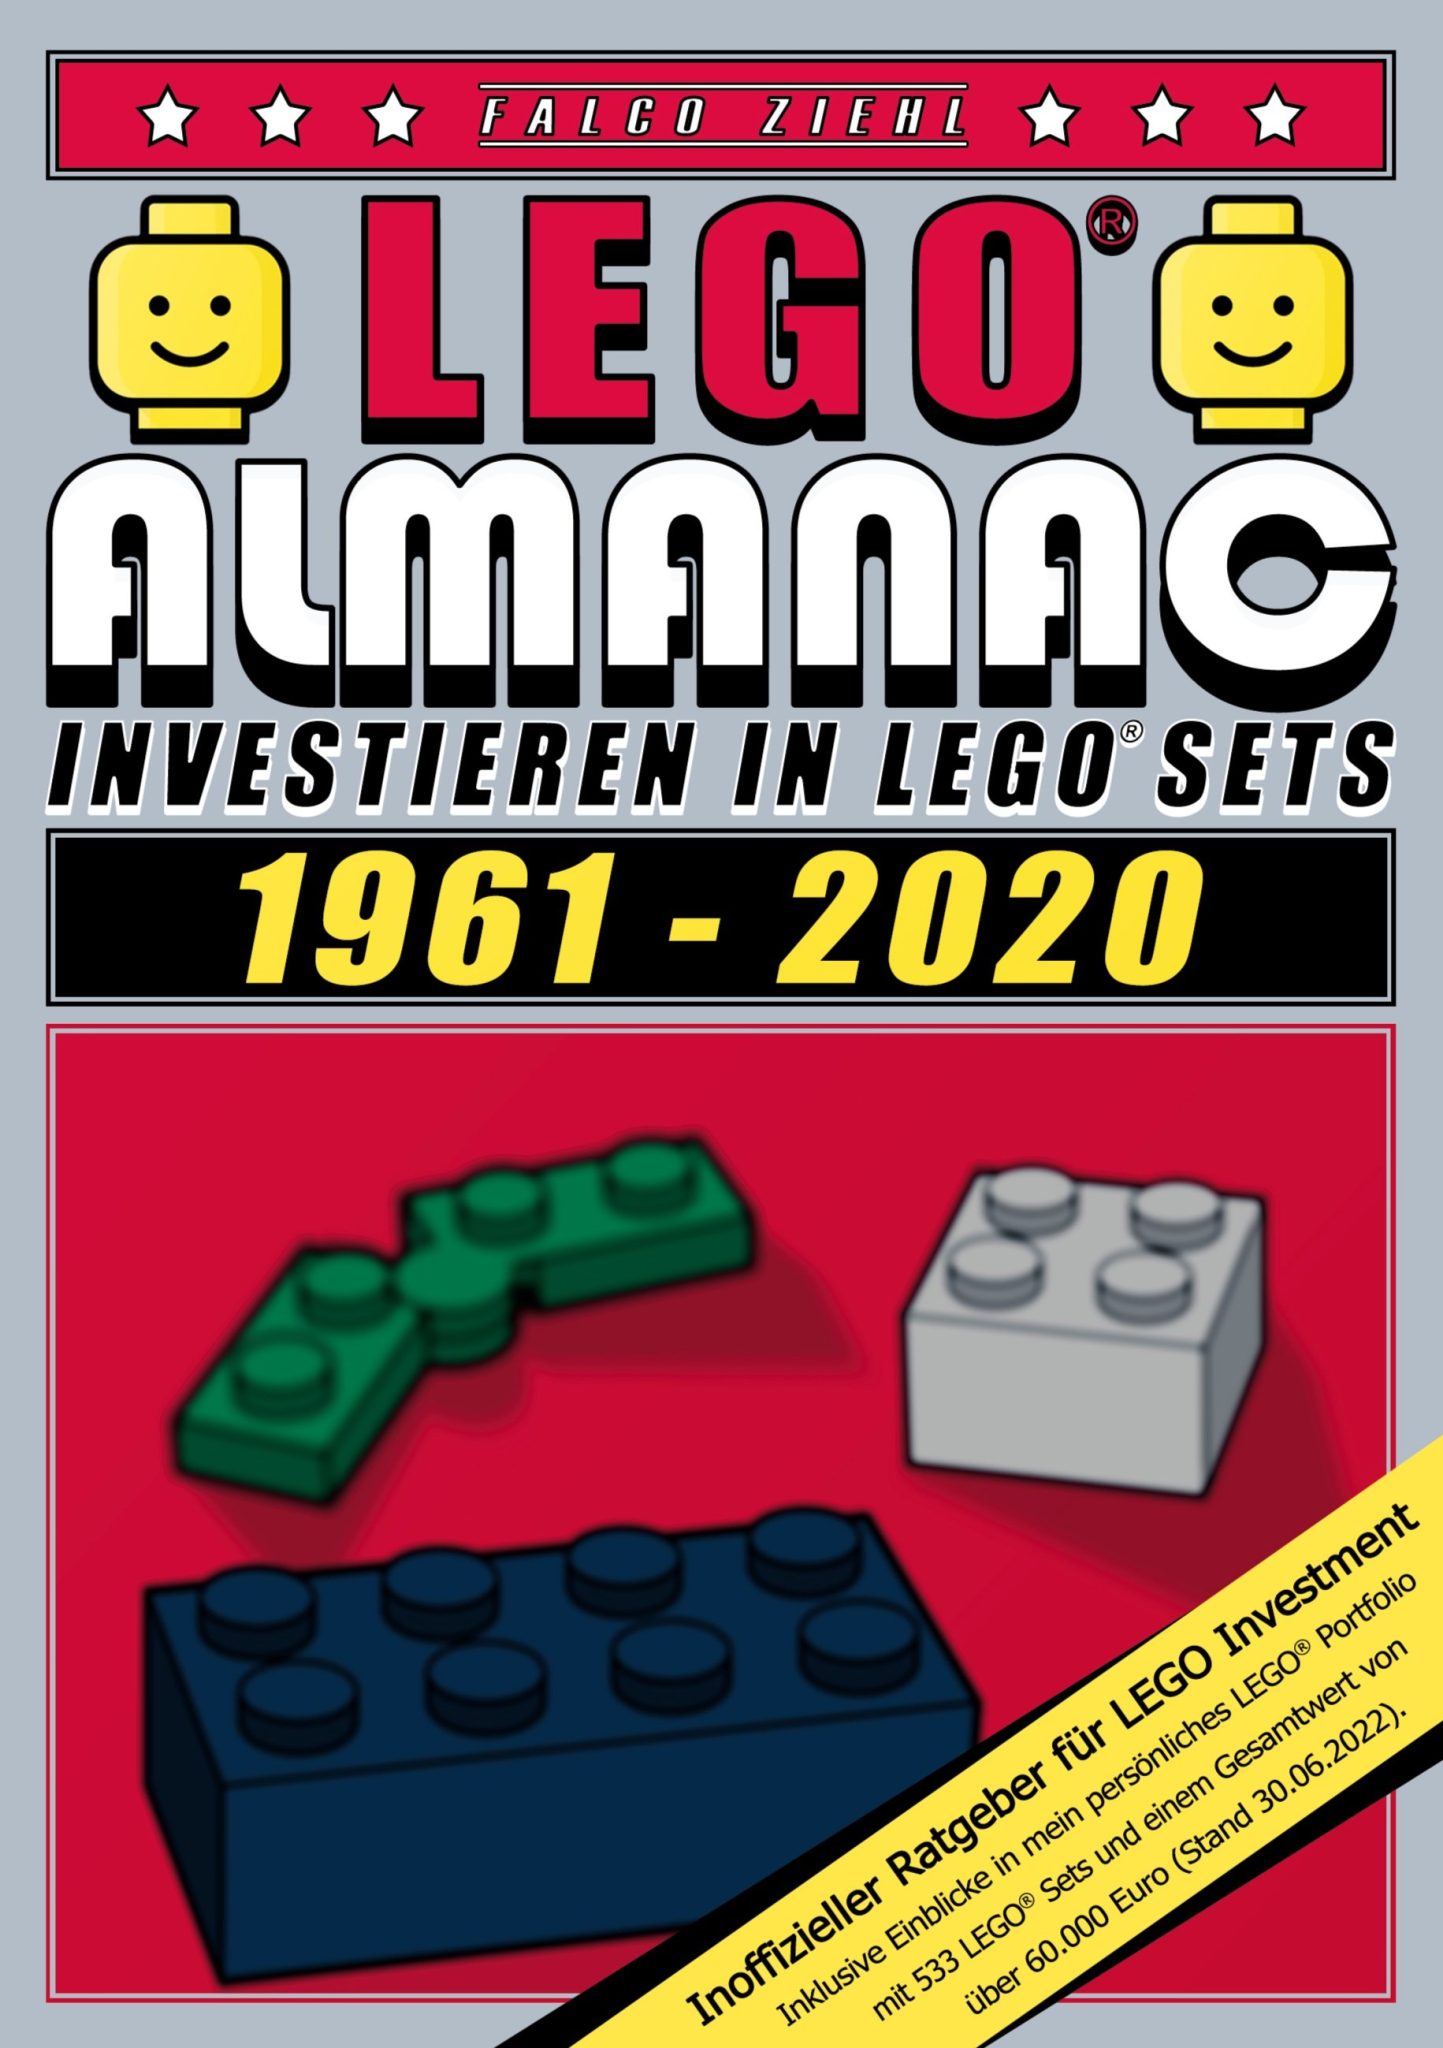 LEGO Almanac - Investieren in LEGO Sets